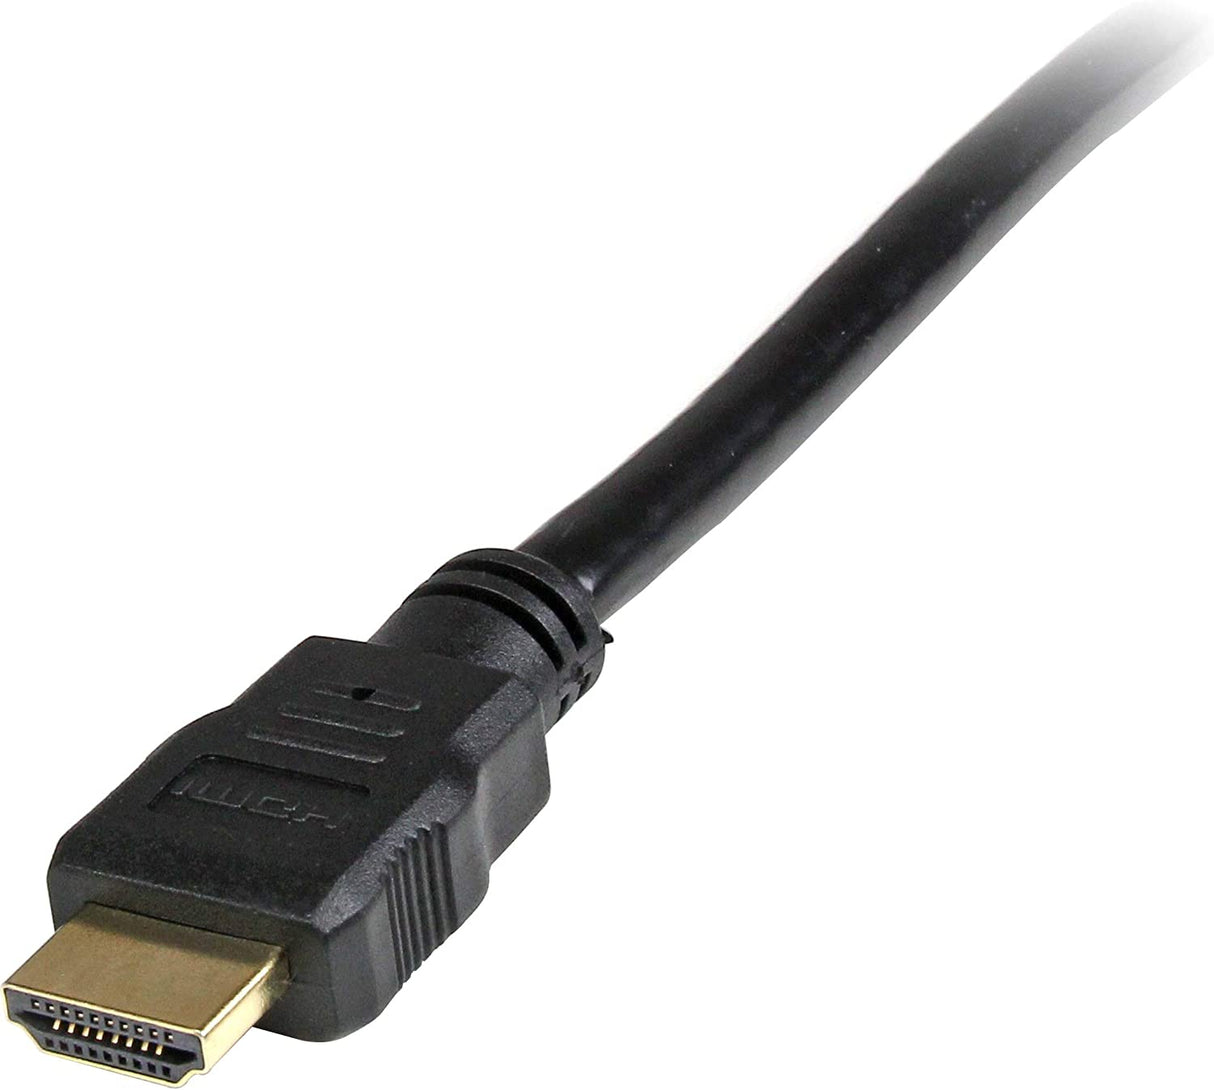 StarTech.com 10ft HDMI to DVI D Adapter Cable - Bi-Directional - HDMI to DVI / DVI to HDMI Adapter for Your Computer Monitor (HDMIDVIMM10) 10 ft / 3m Standard Packaging